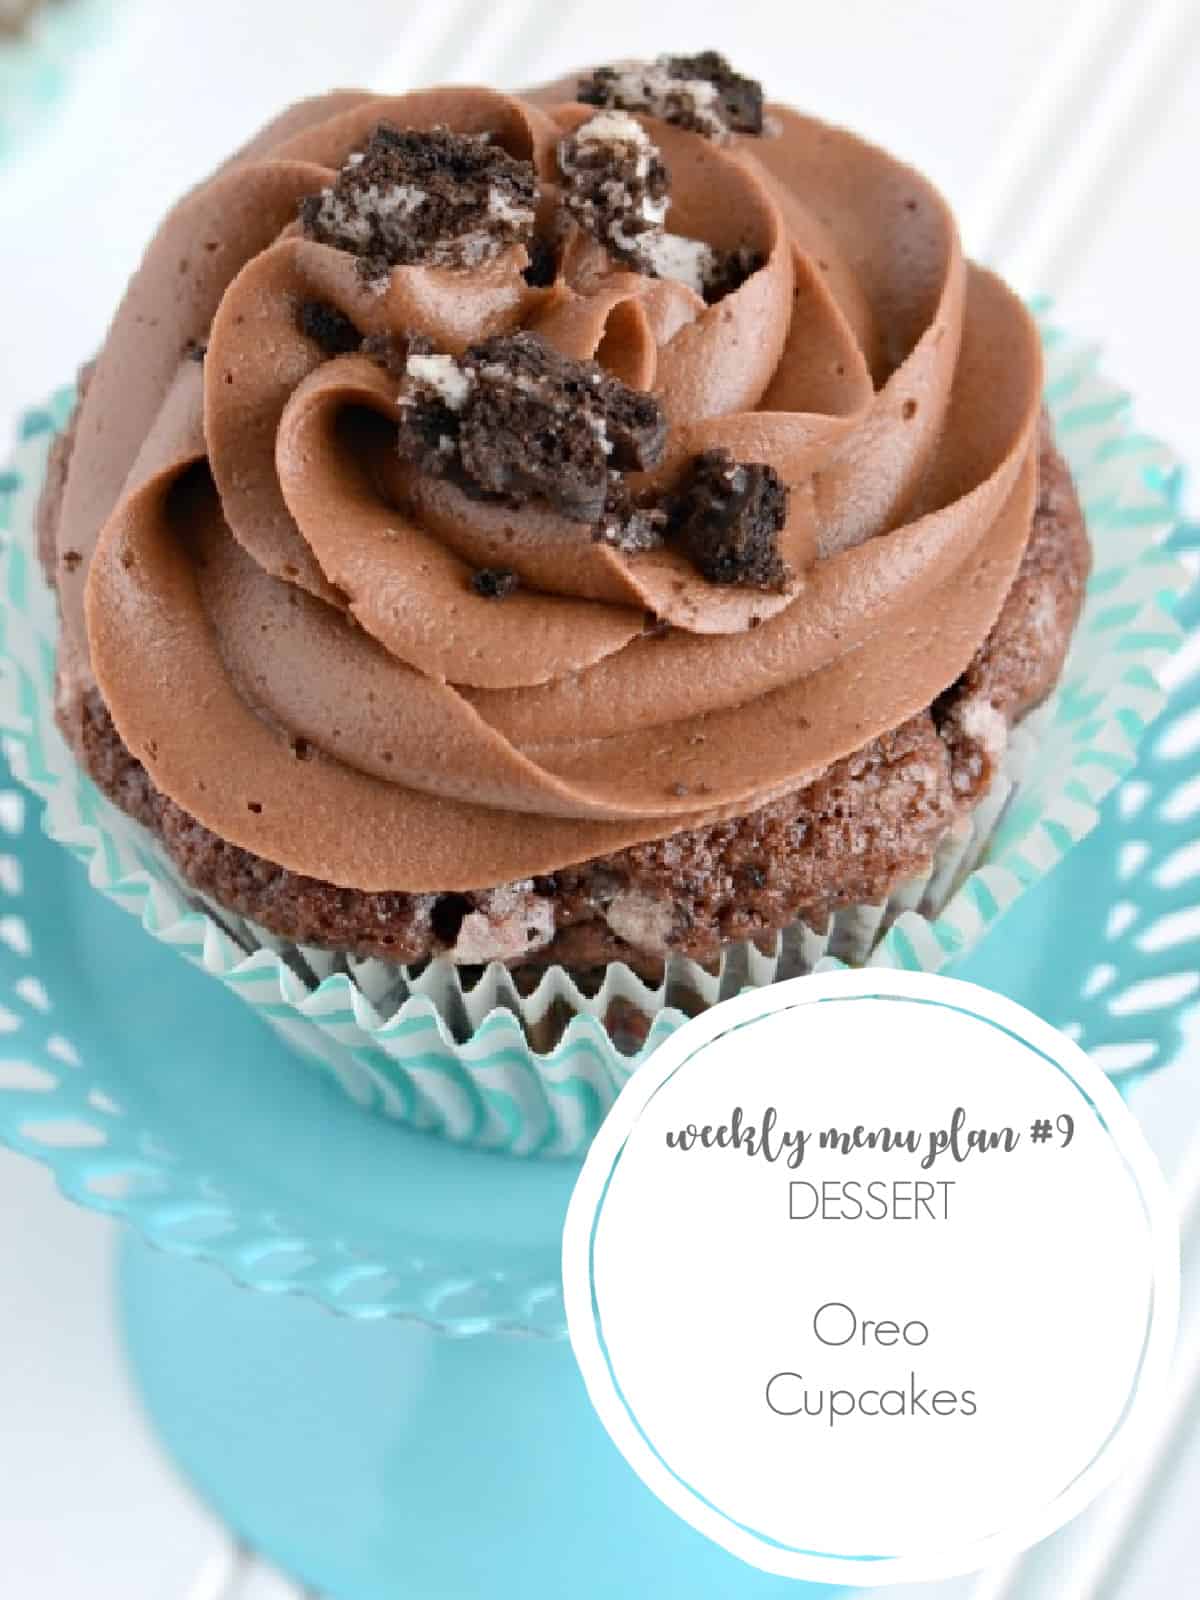 oreo cupcakes for weekly menu plan #9